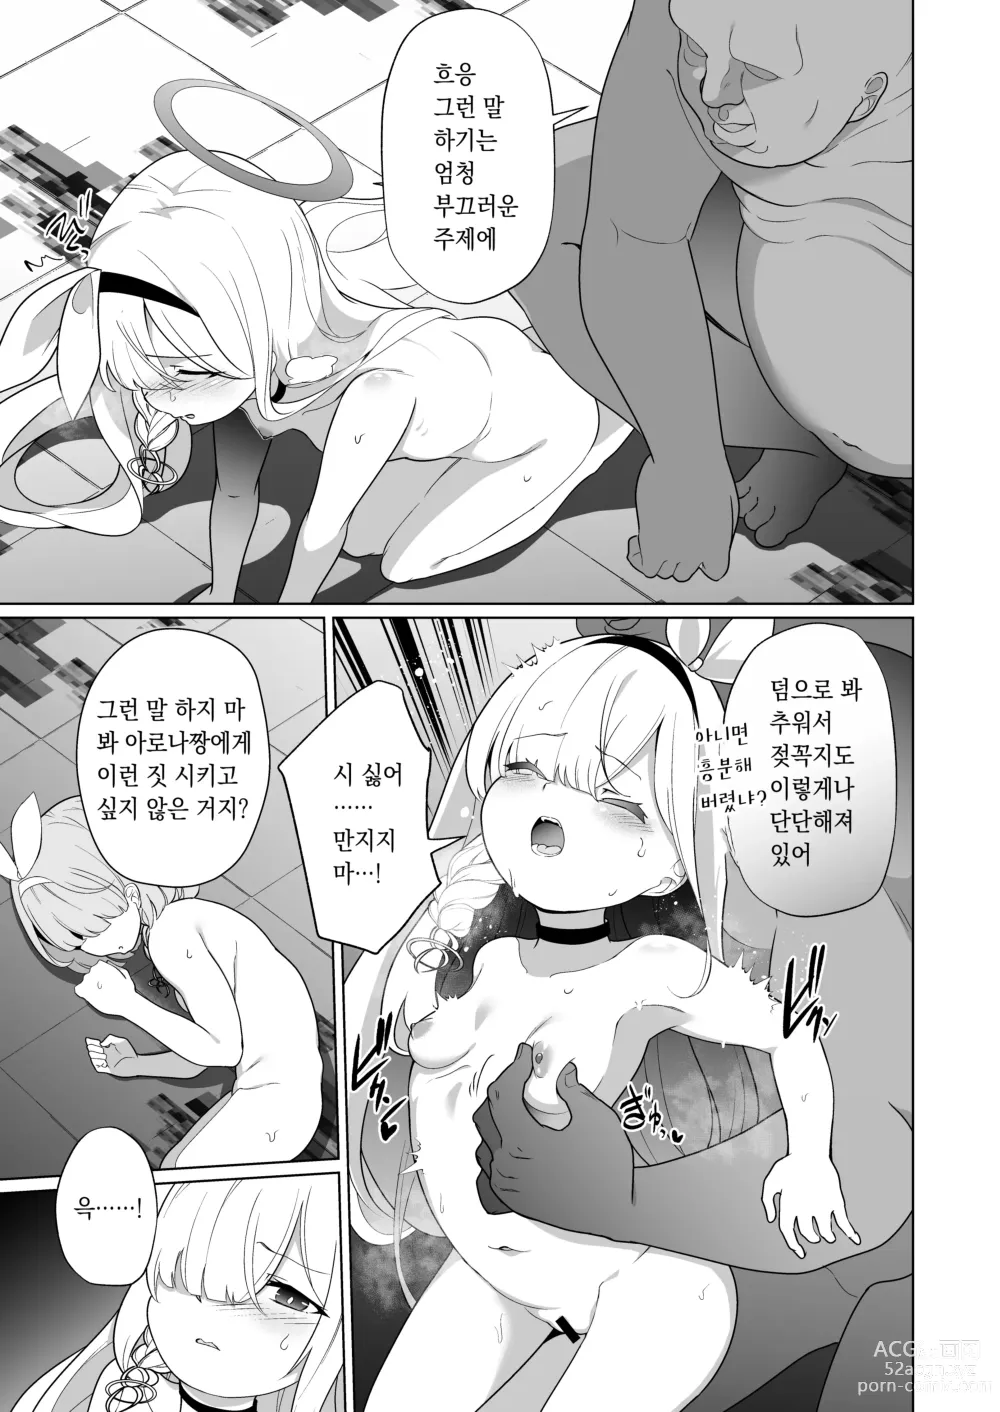 Page 12 of doujinshi 싫어하는 프라나가 기꺼이 봉사하는 이야기